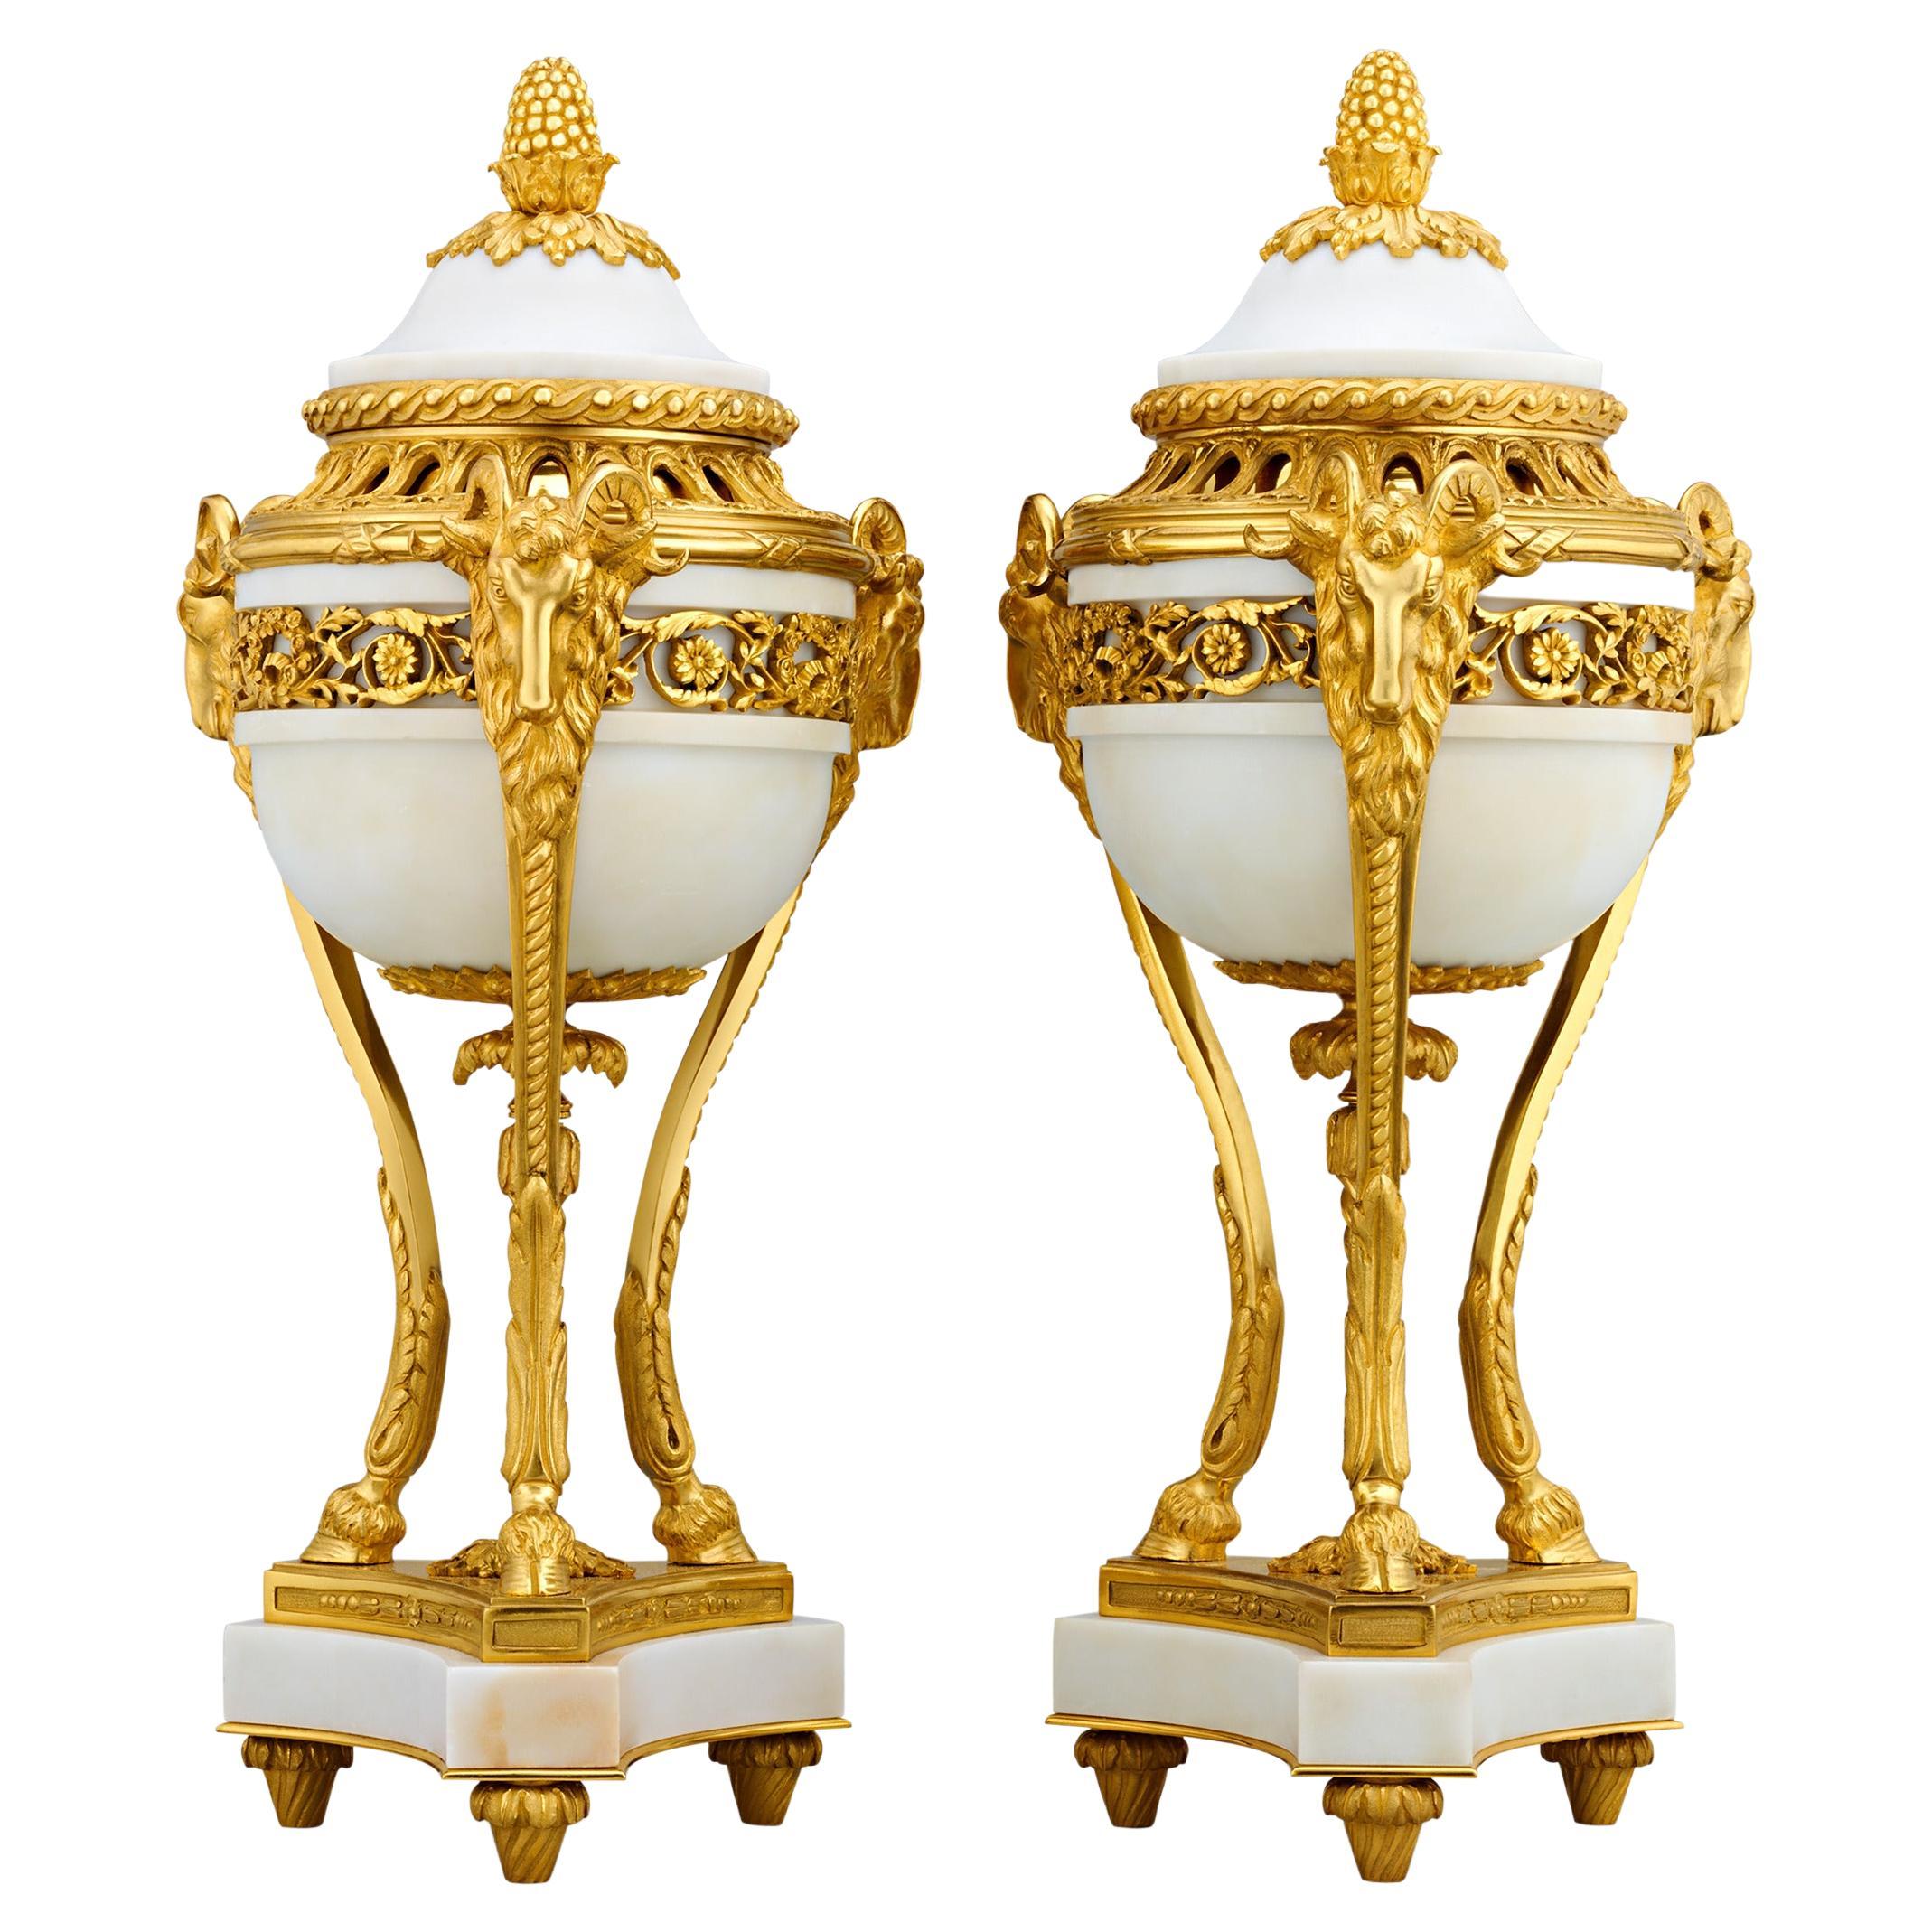 Vases de style Louis XVI